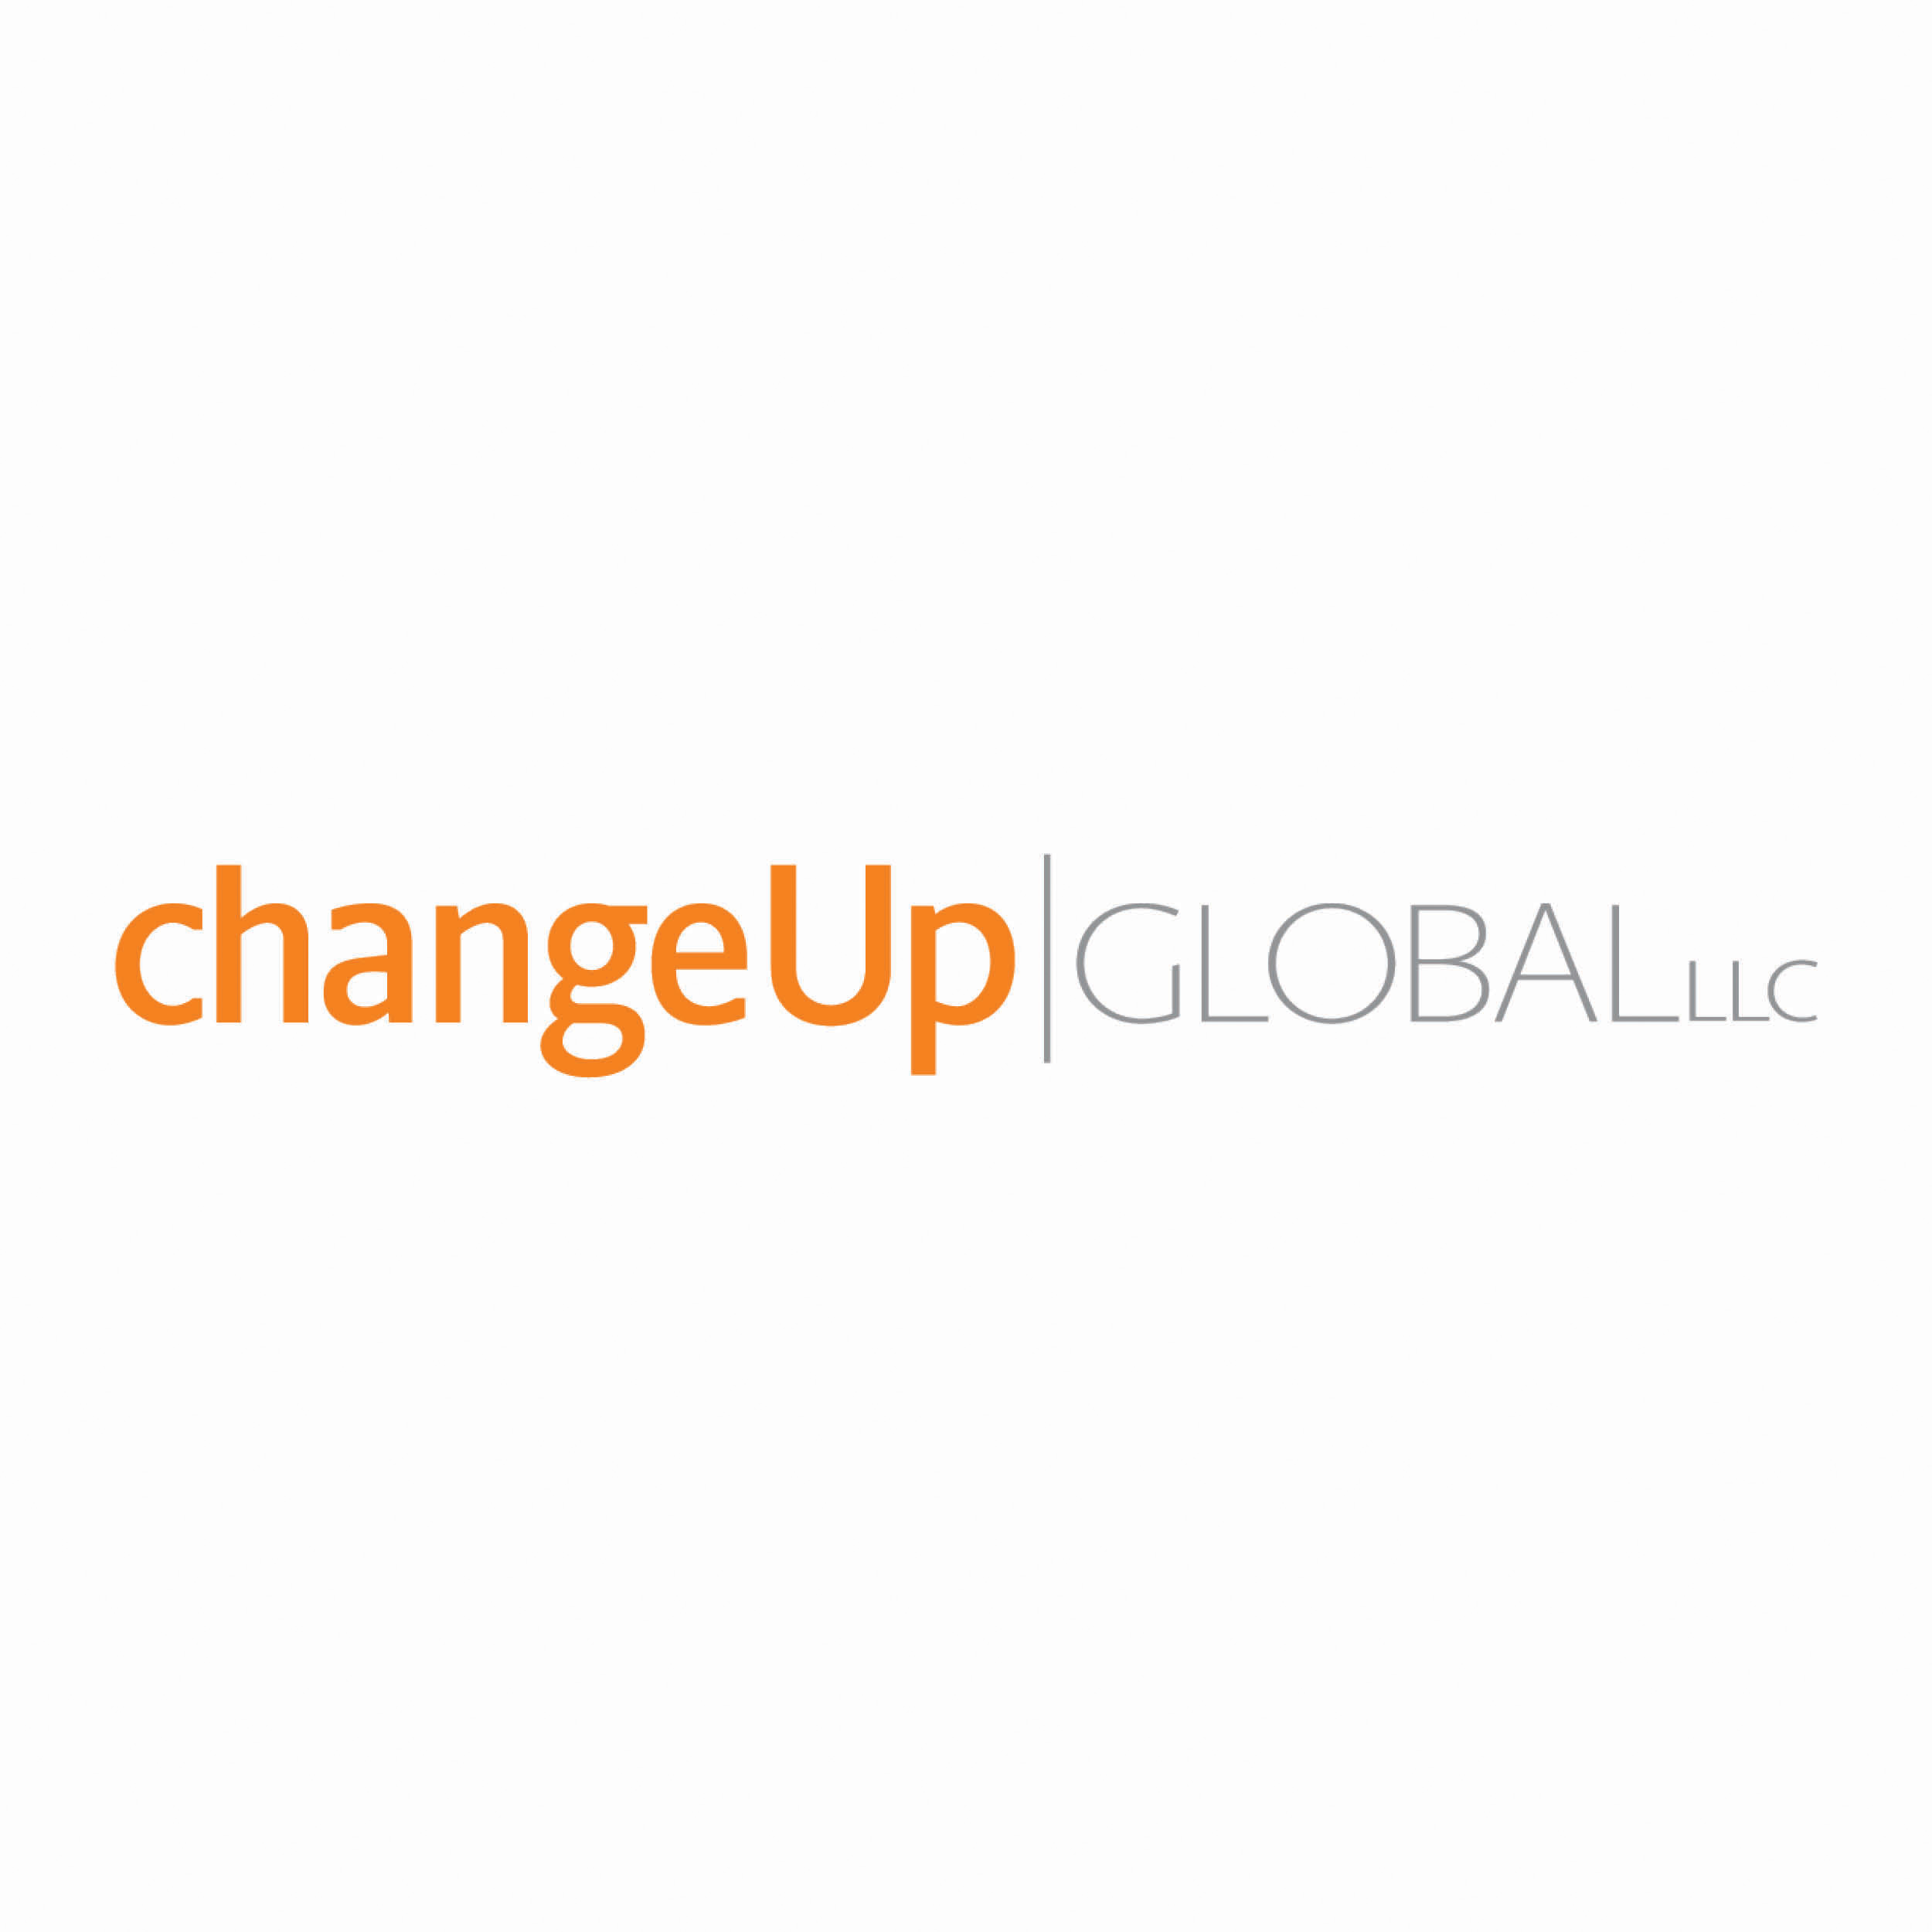 ChangeUp Global